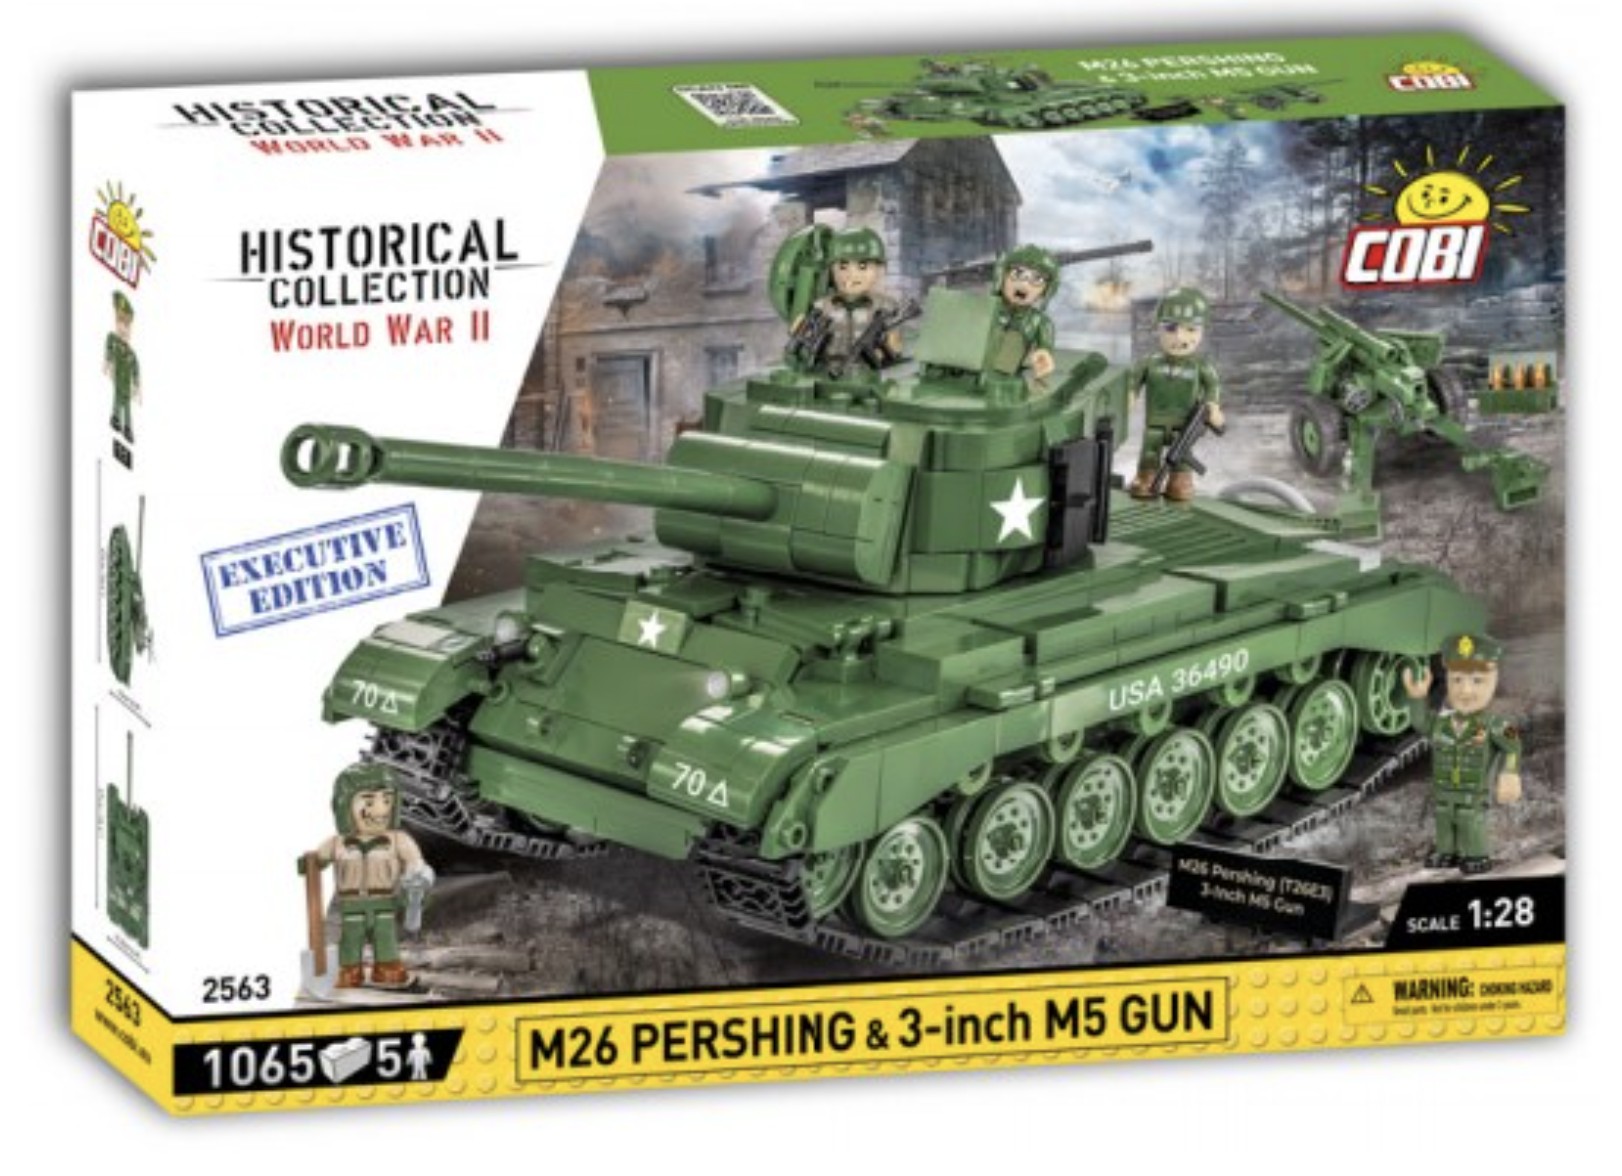 2563 - M26 Pershing - 3-inch M5 Gun - Executive Edition